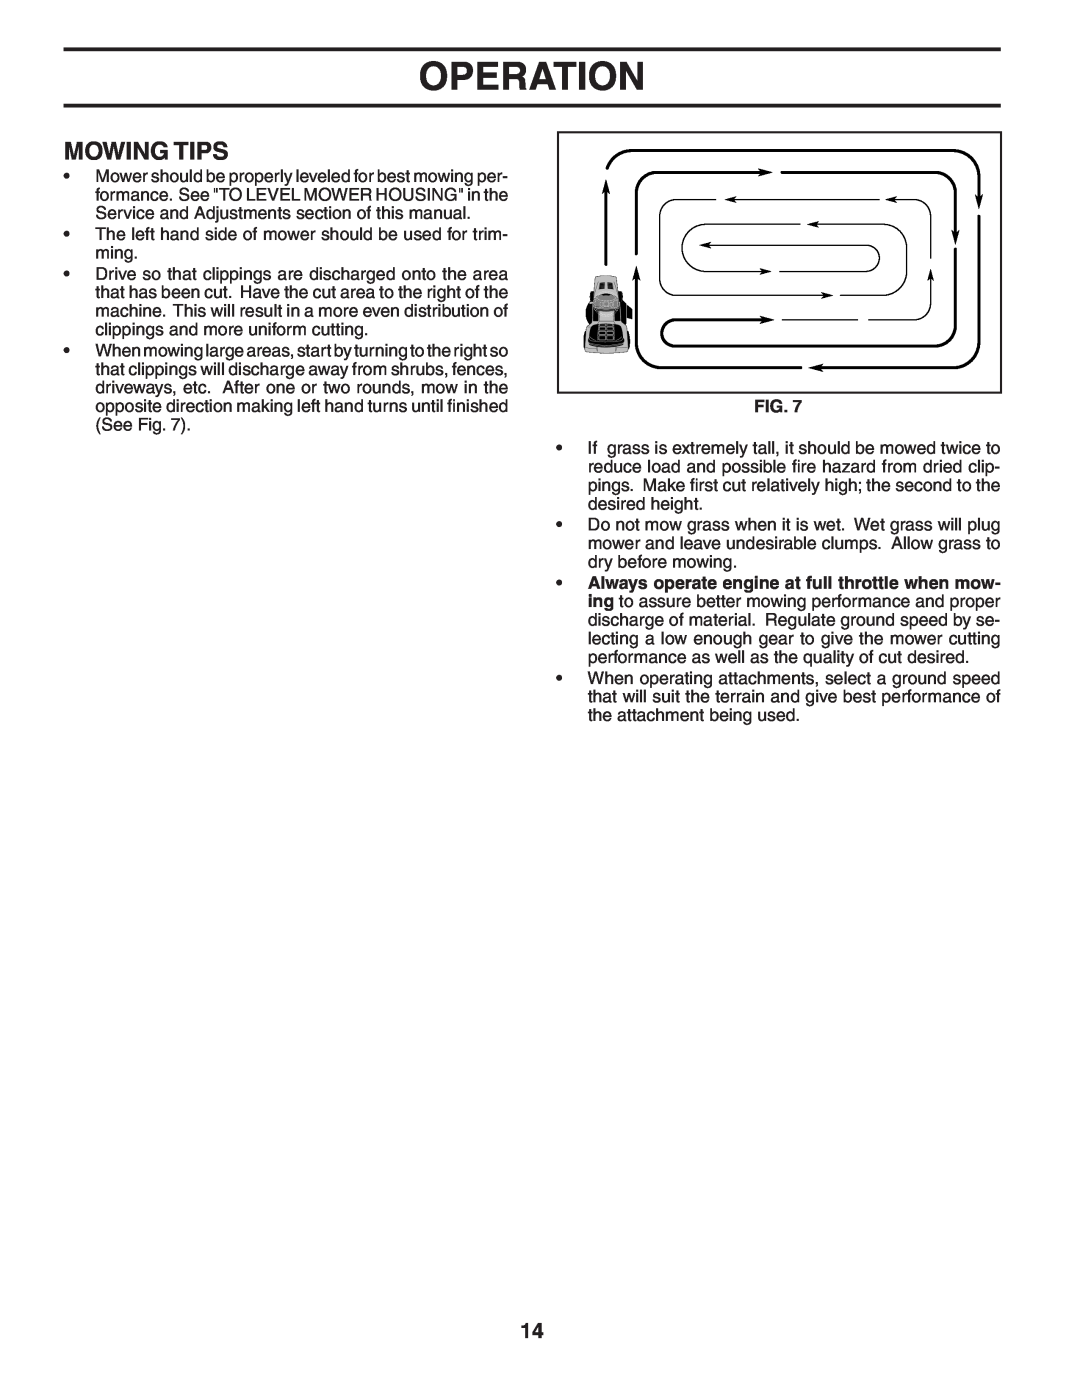 Poulan HD17542 manual Mowing Tips, Operation 